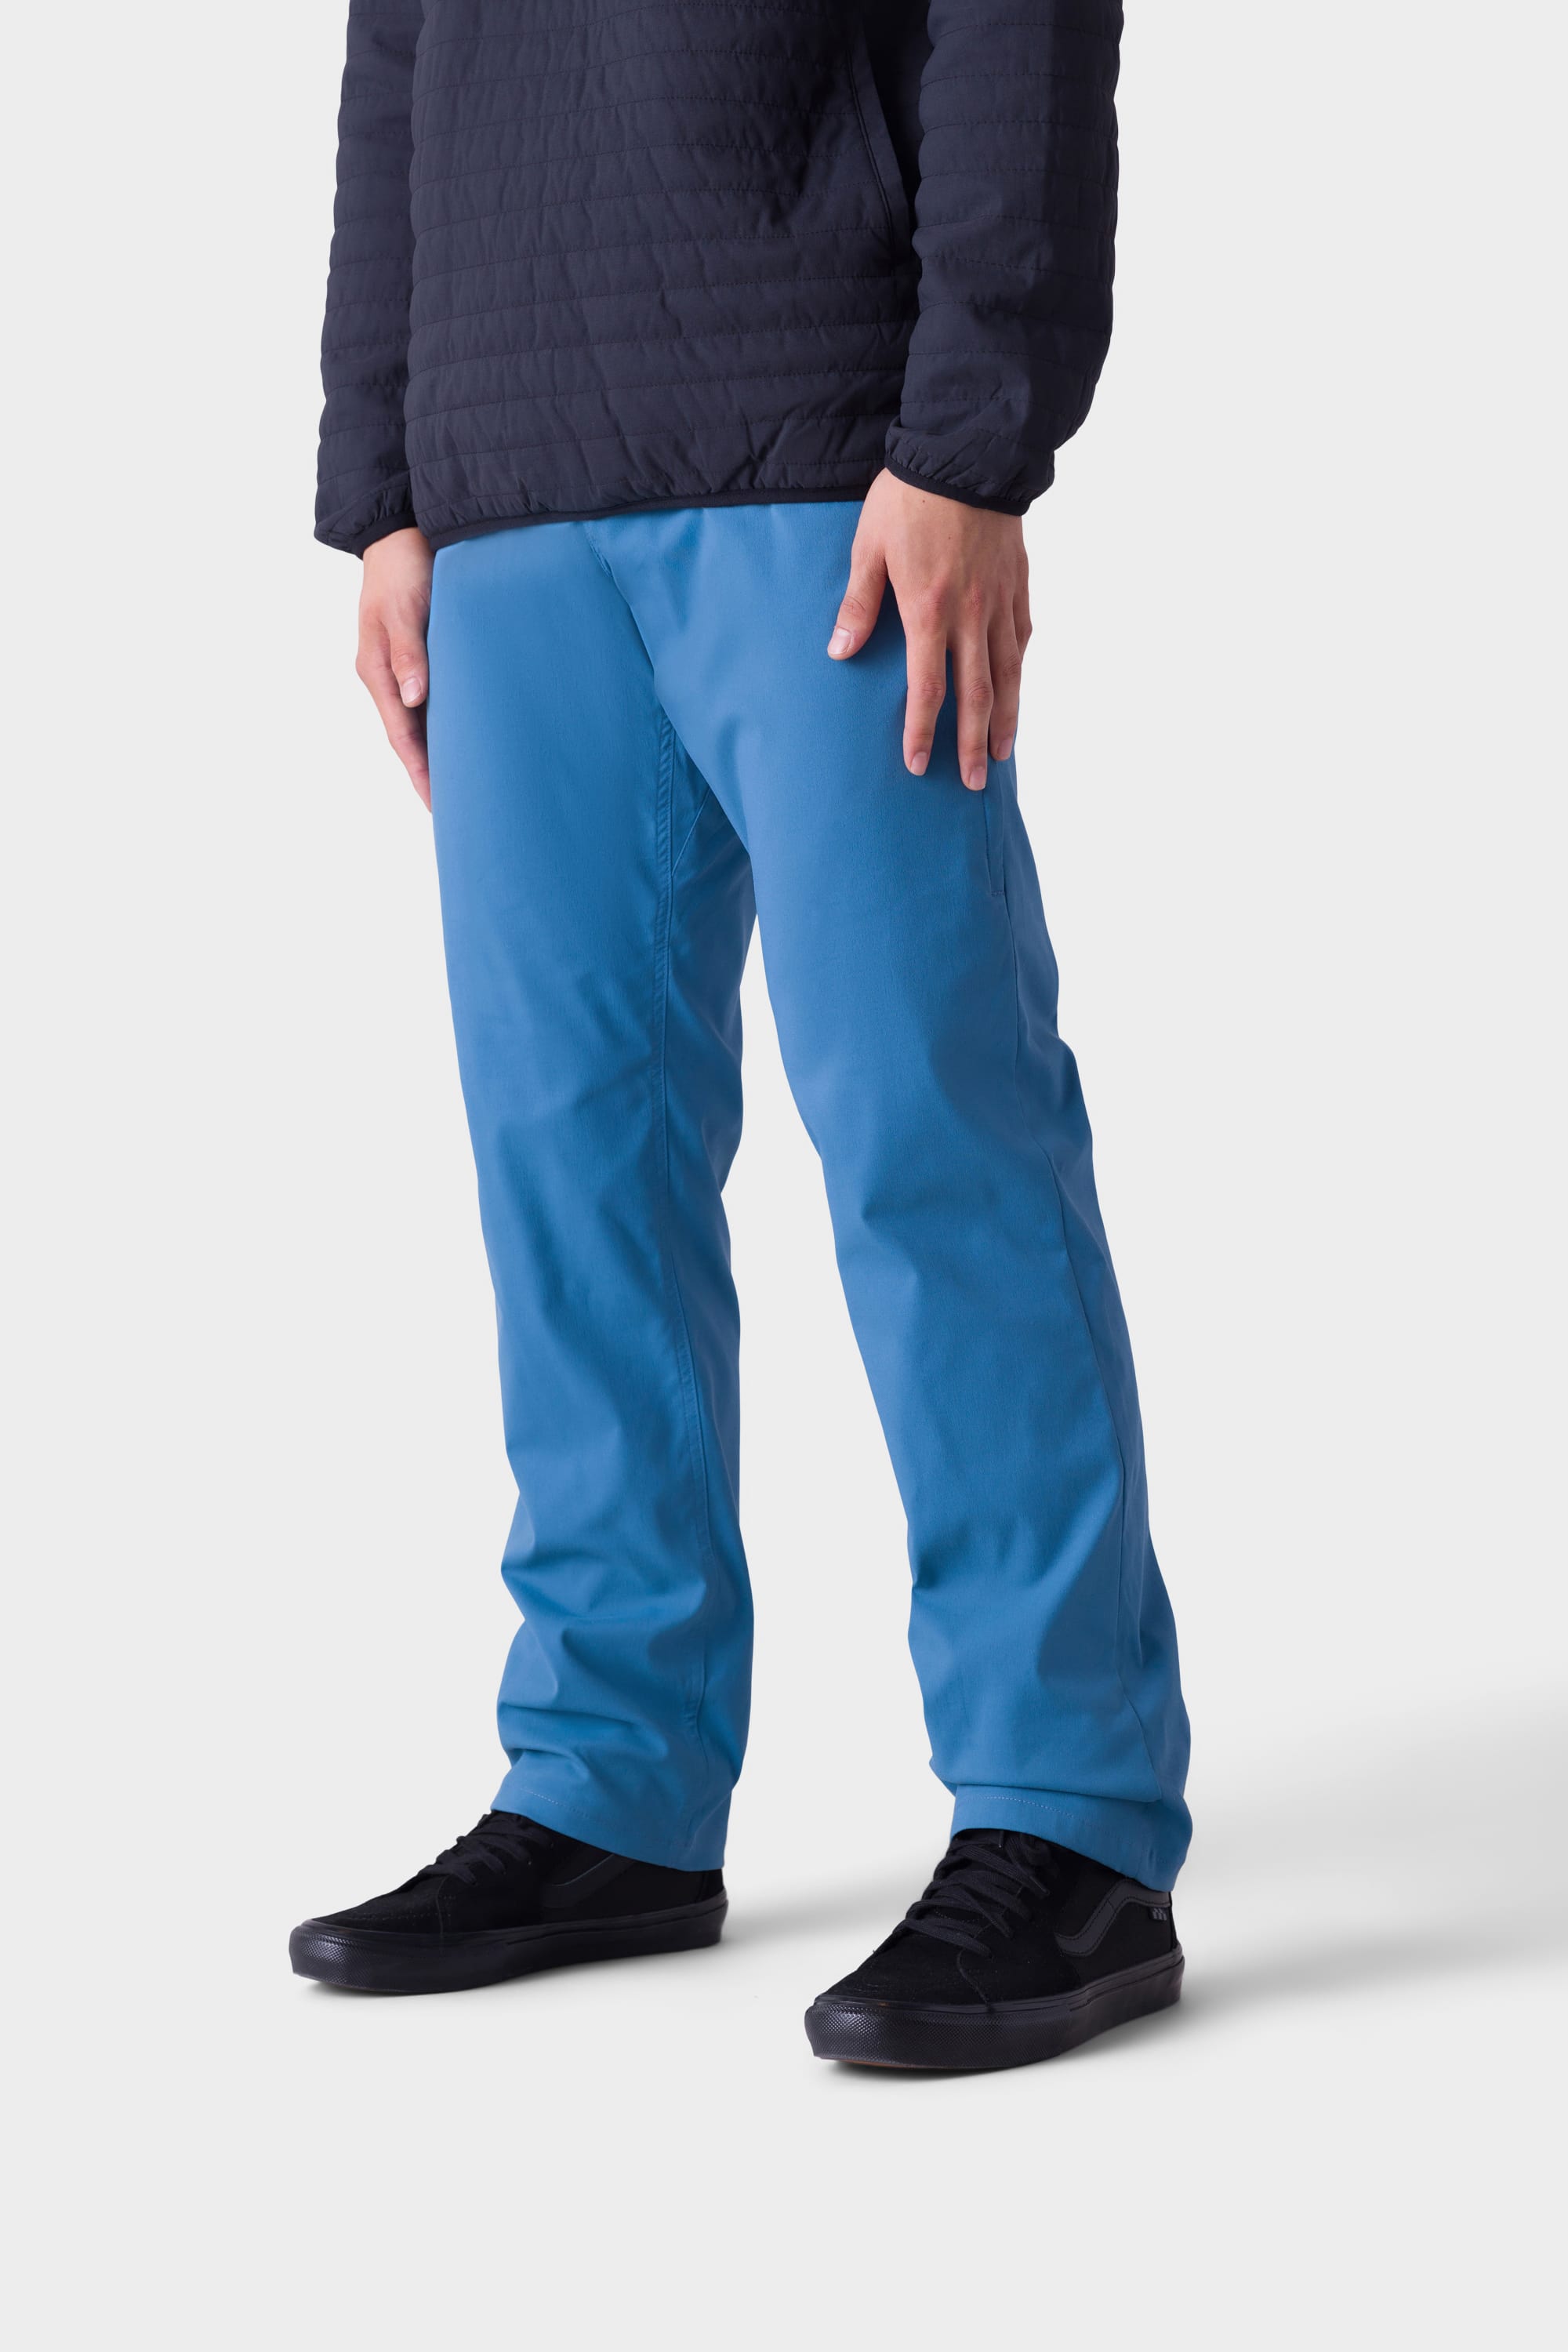 Merino Wool Sweatpants, Men's Powder Pant